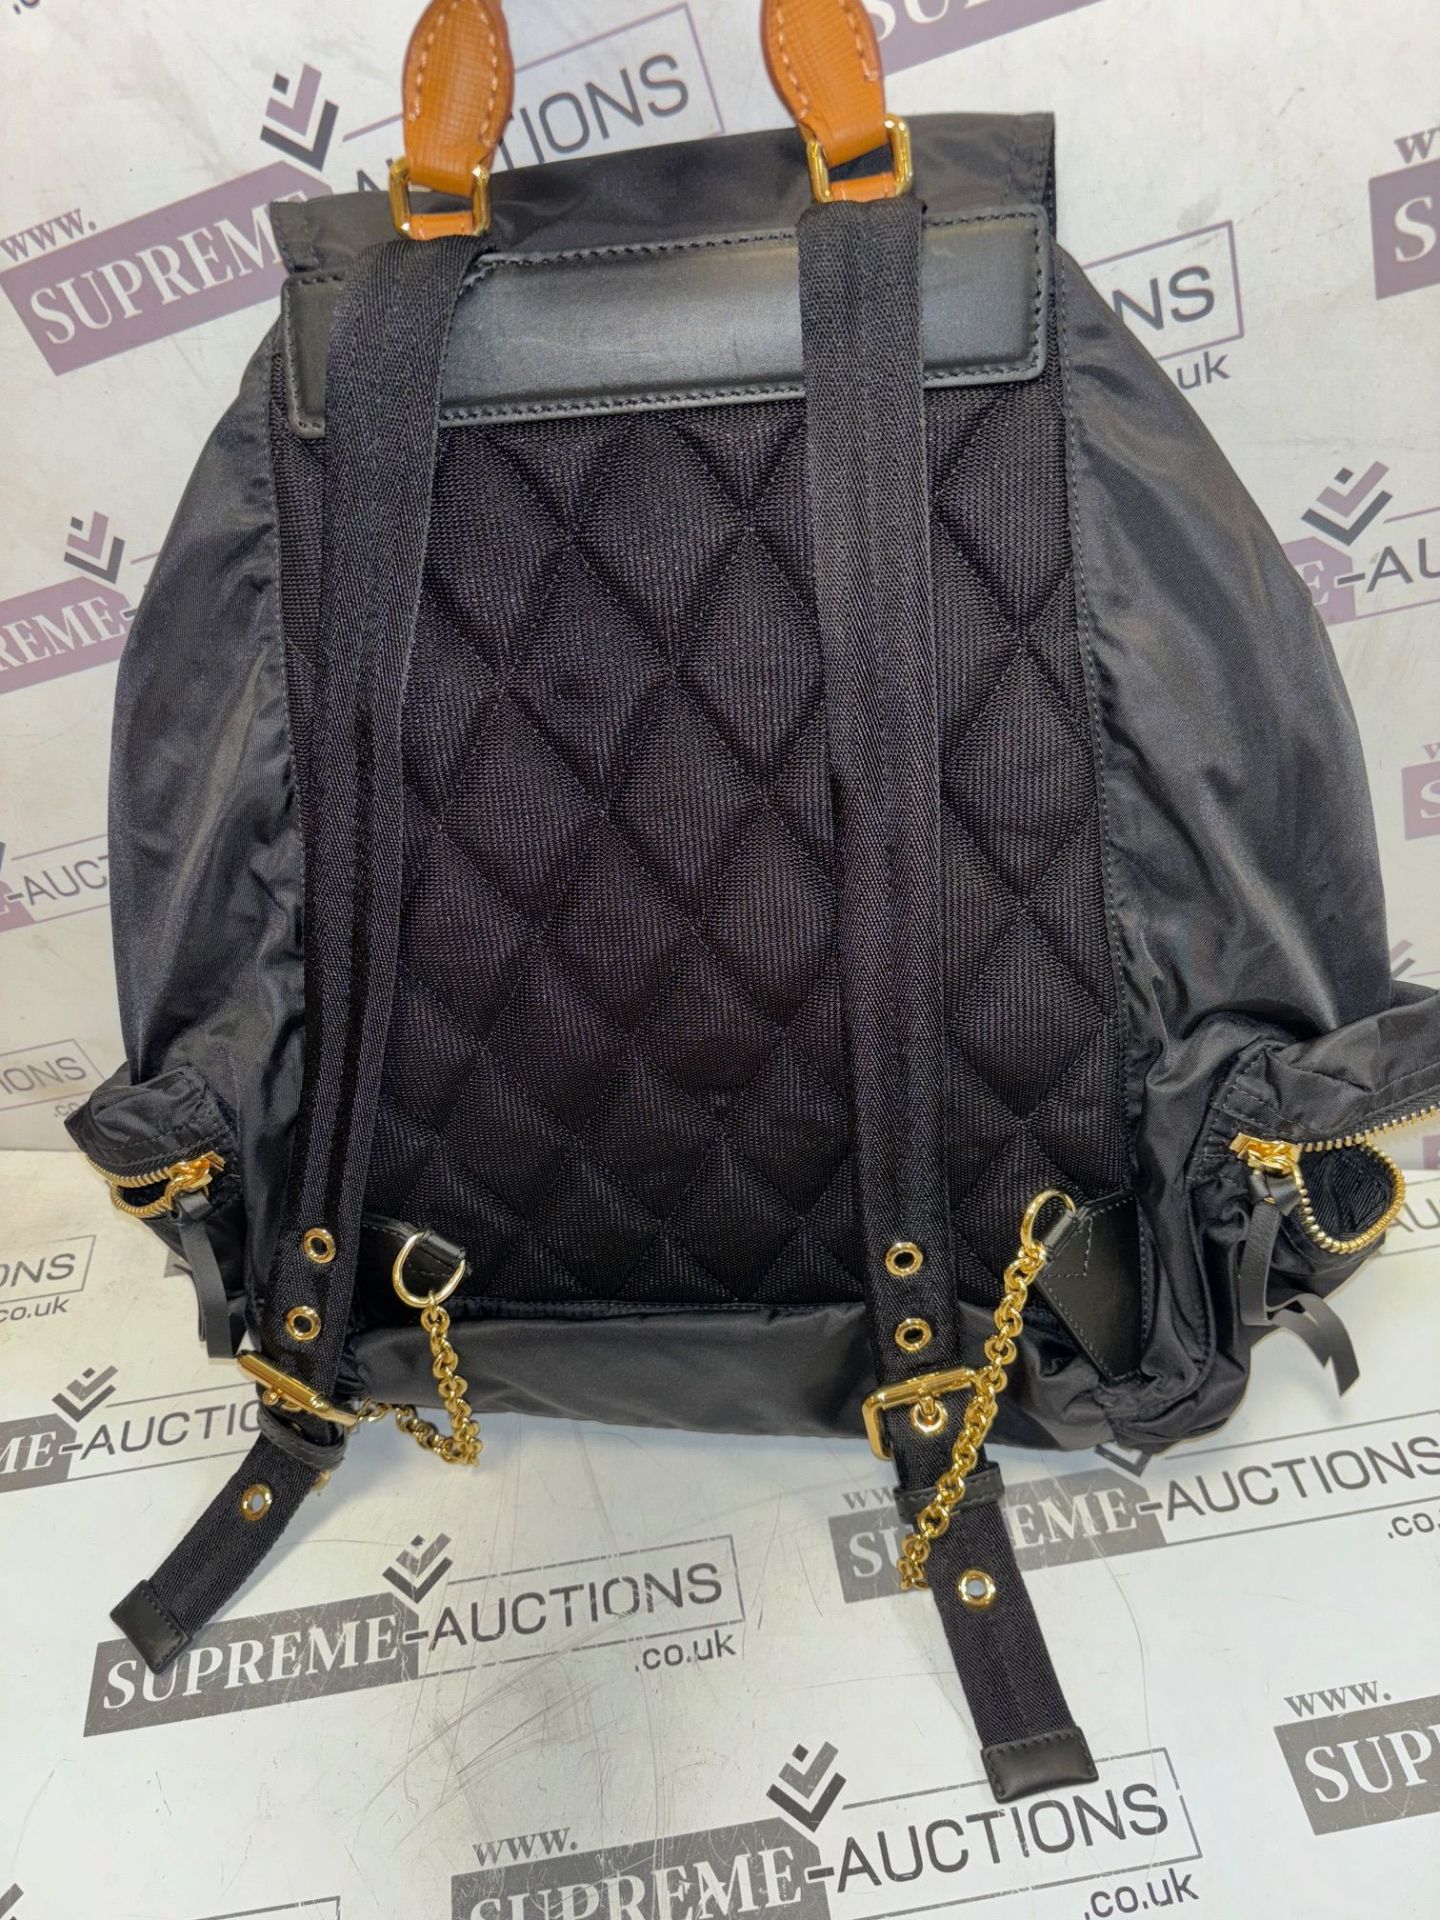 Genuine Burberry Nylon Medium Rucksack Backpack Black, personalised SBDC. Used for training. - Image 4 of 6